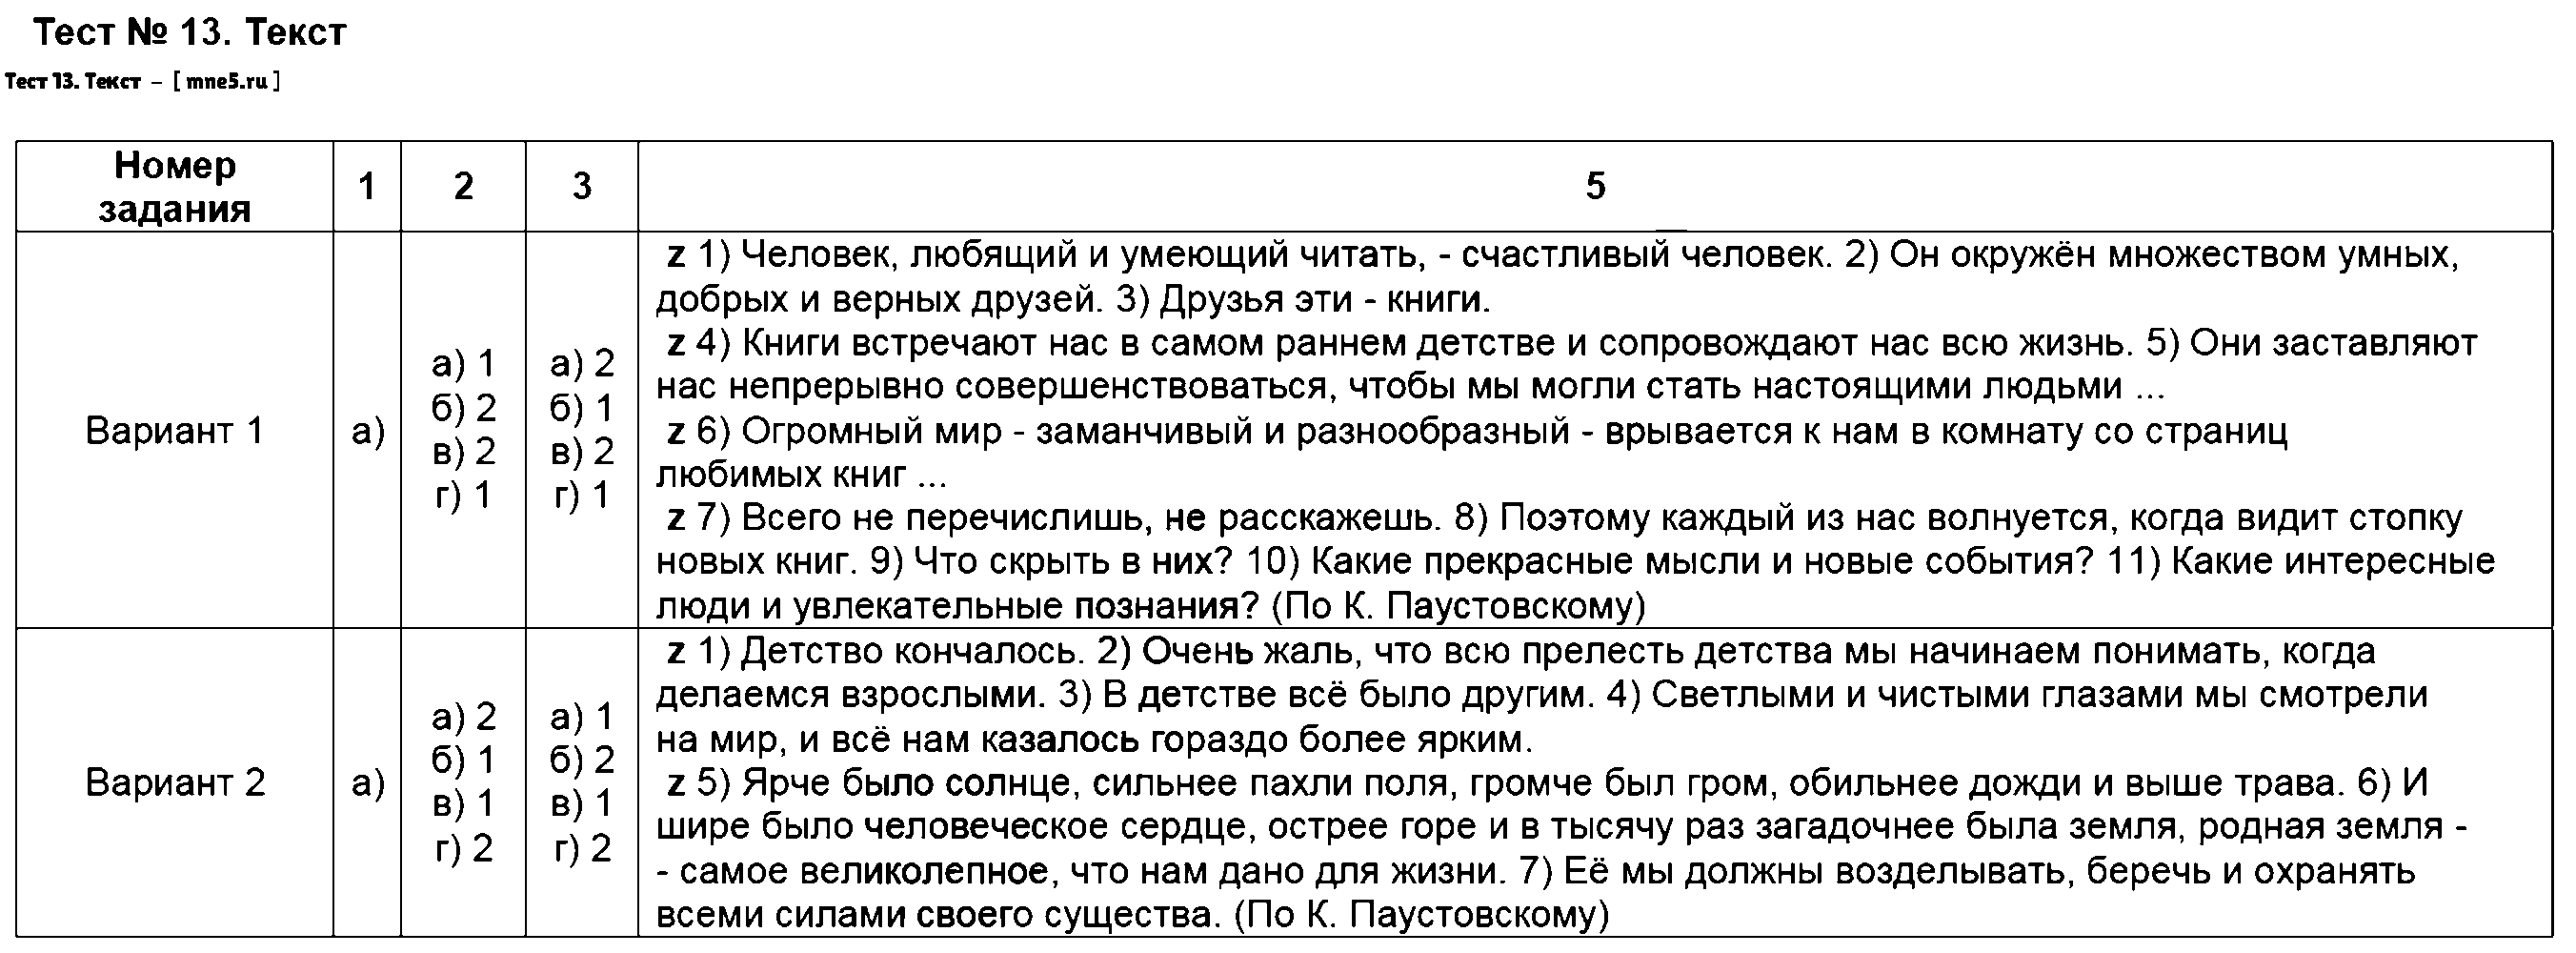 ГДЗ Русский язык 5 класс - Тест 13. Текст